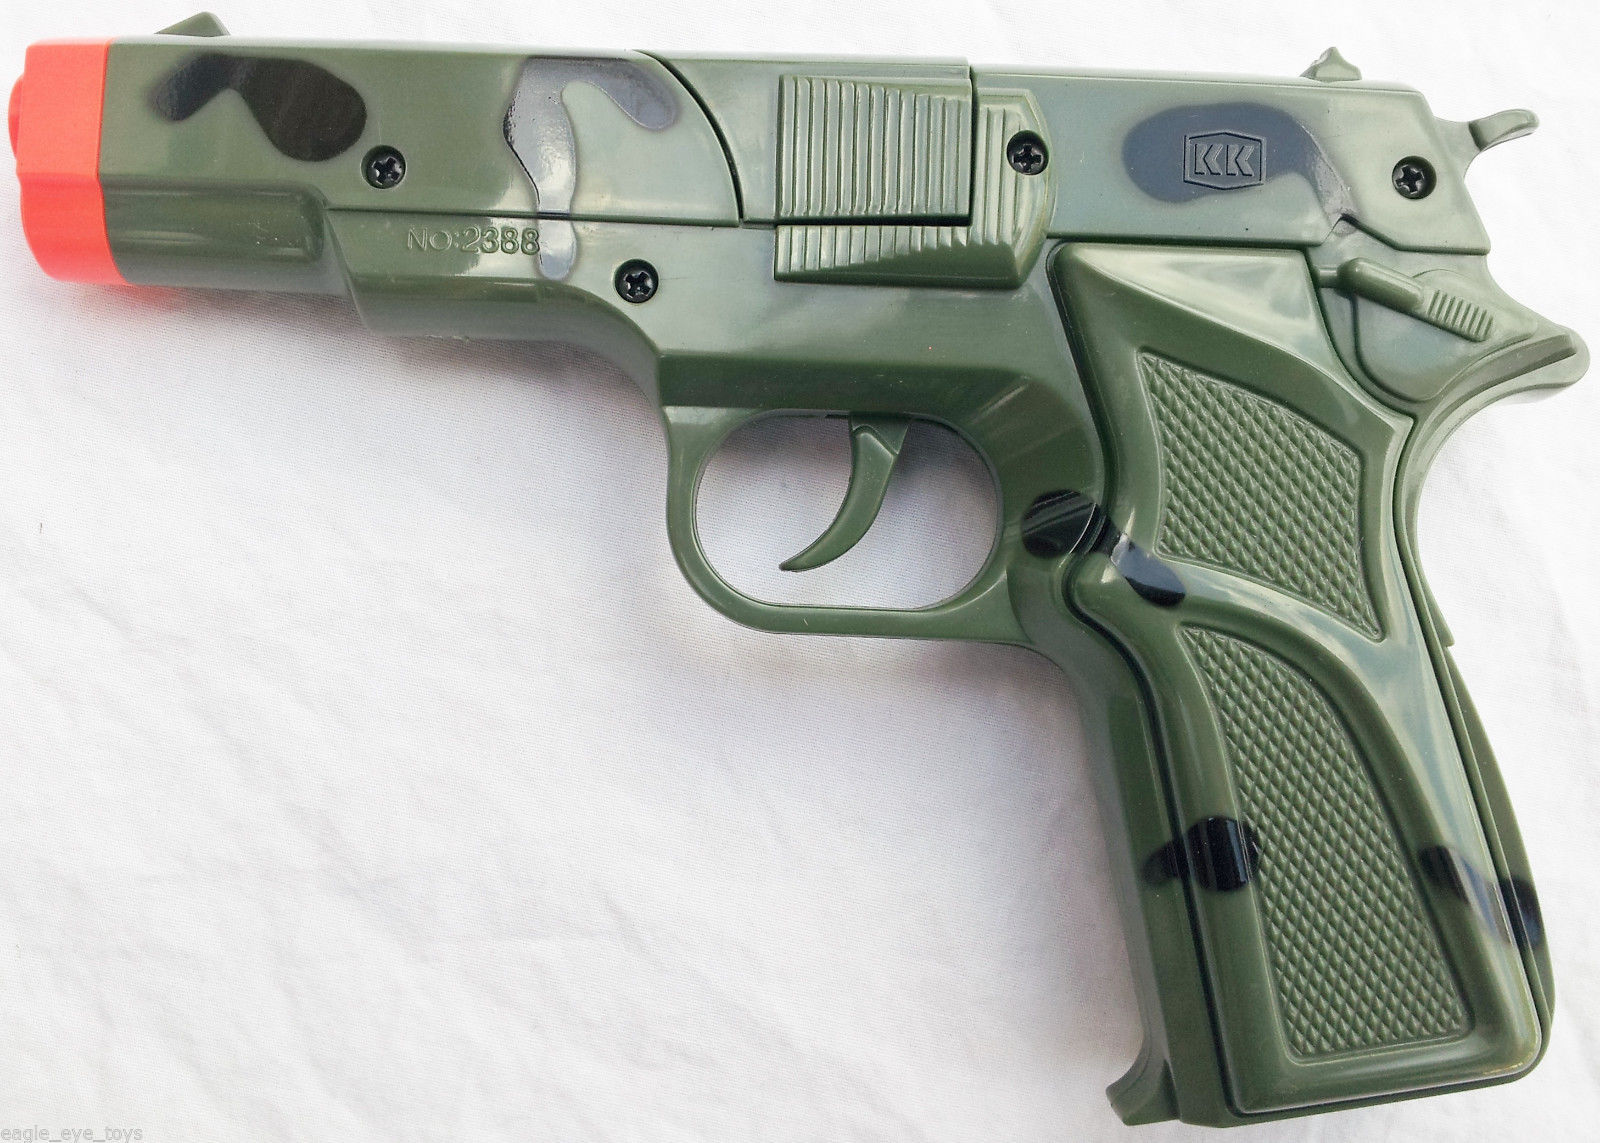 2x Toy Guns Military M 16 Toy Rifle And Camo 9mm Pistol Toy Cap Gun Set